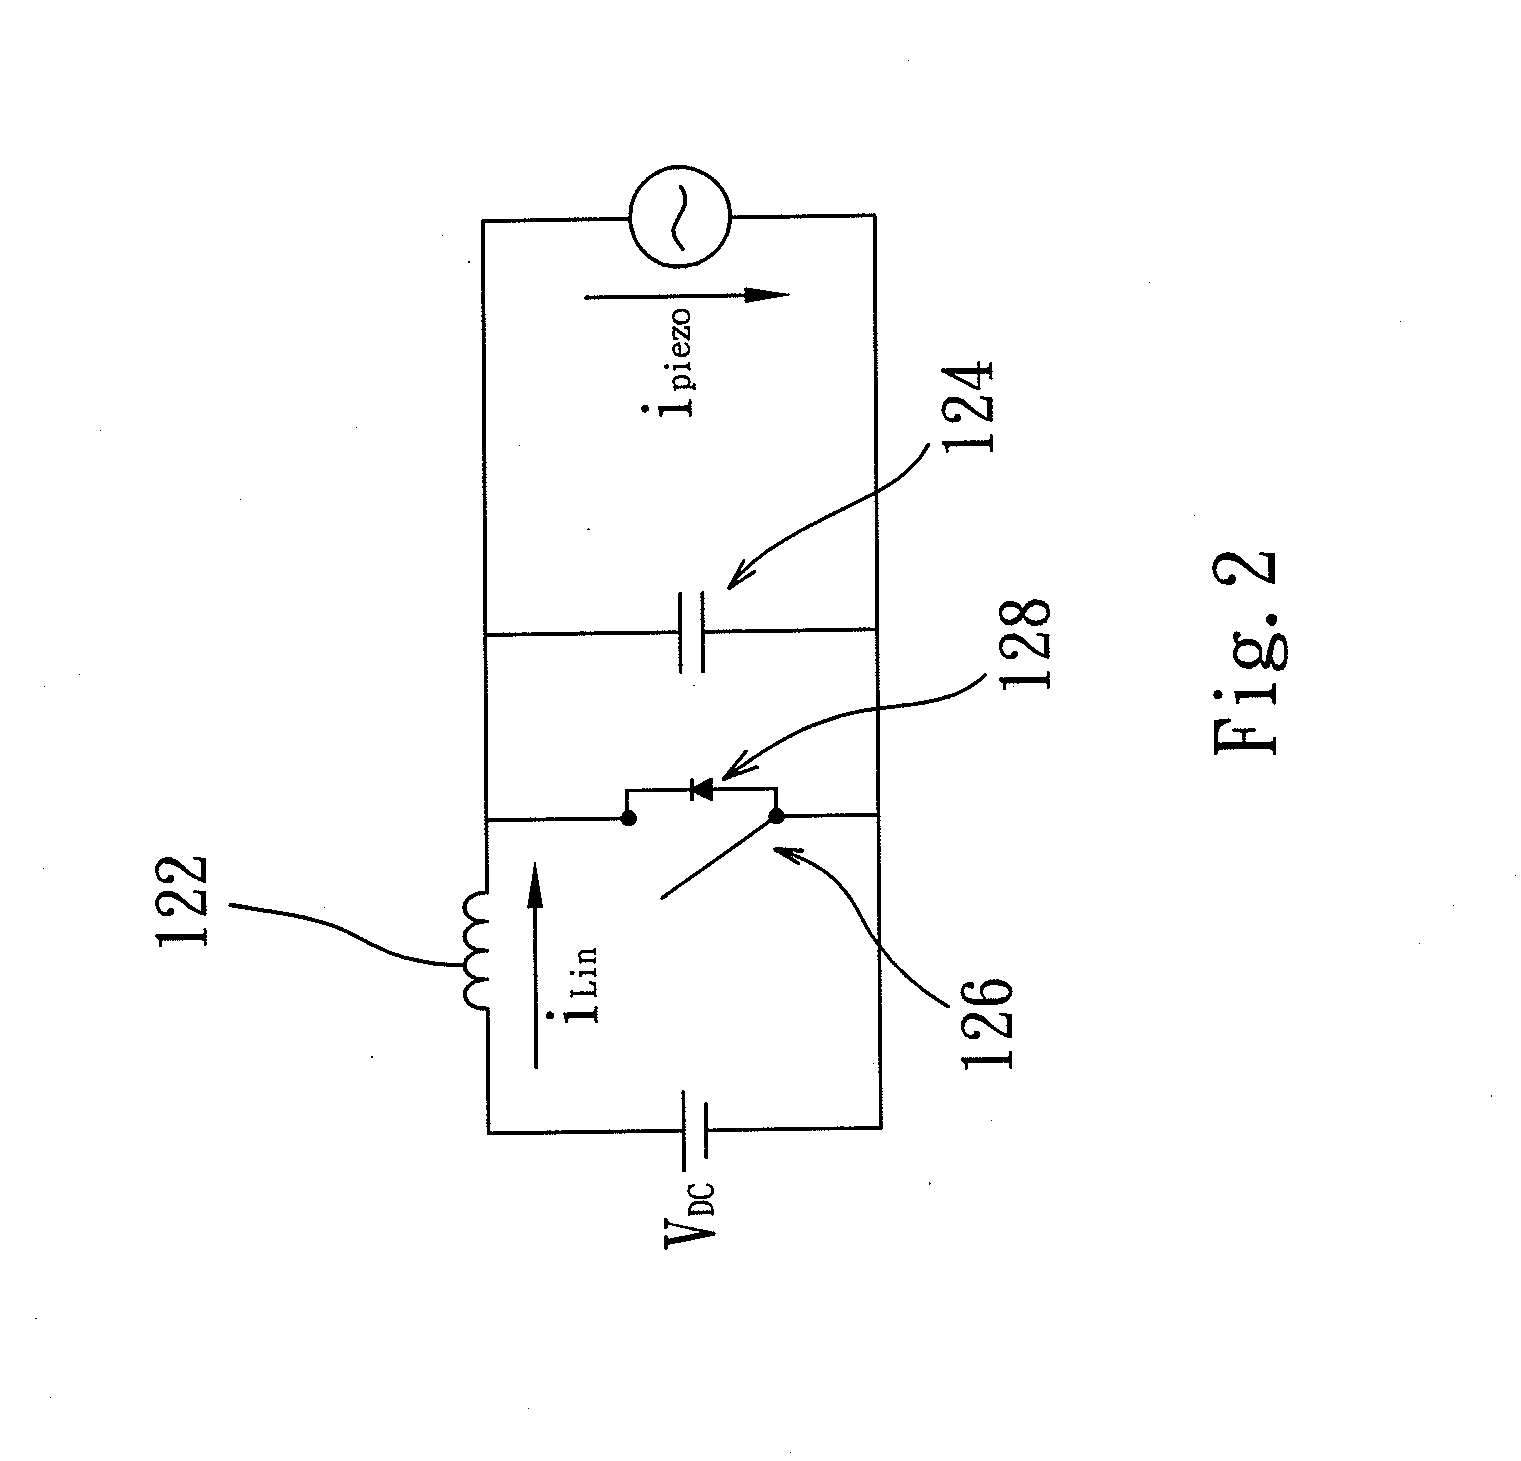 Piezoelectric resonator light-emitting-diode (LED) driving circuit